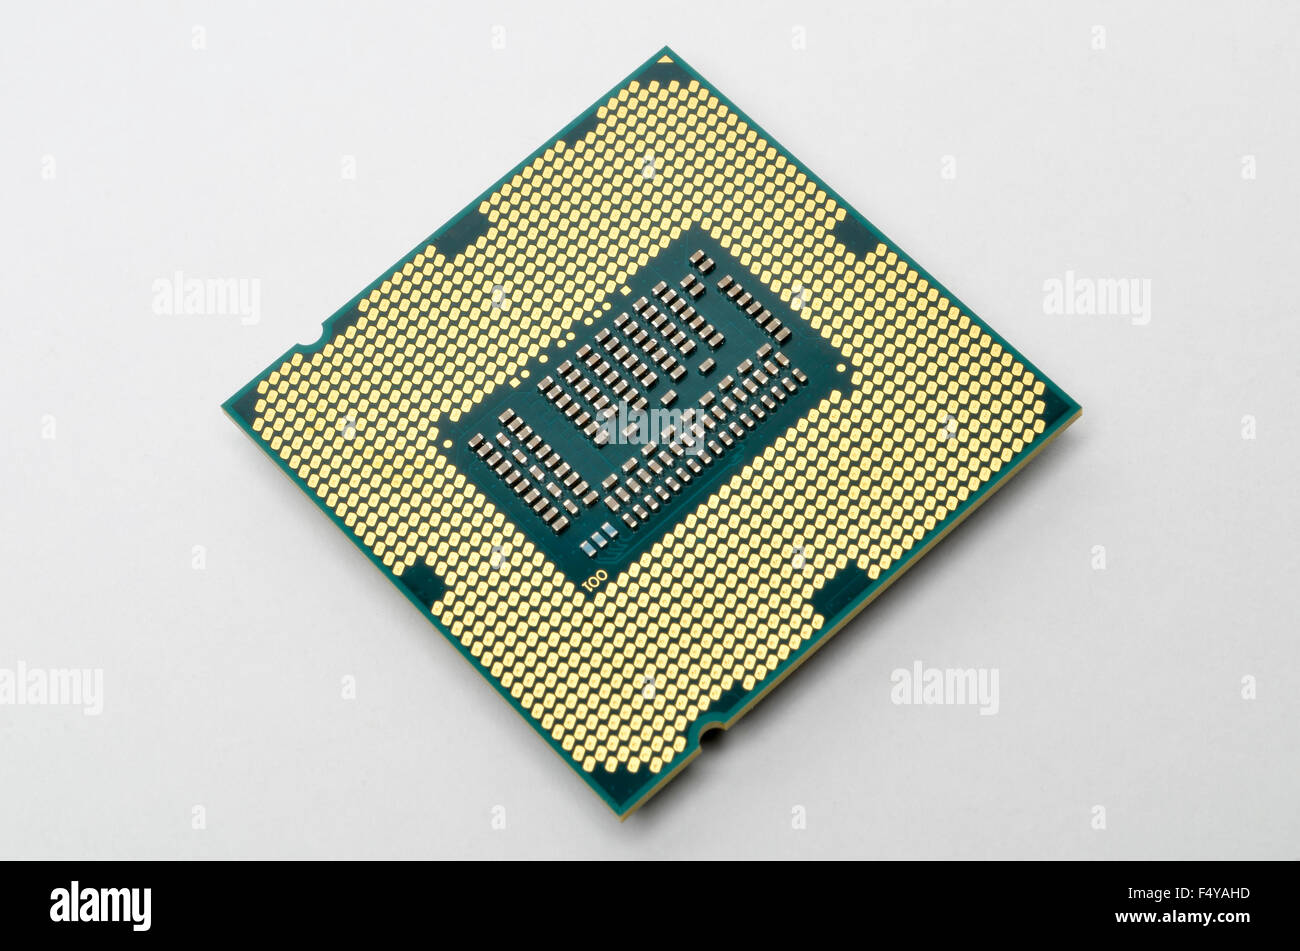 Intel i5 3570K 3.4 GHz Quad Core LGA1155 CPU processor chip on a white  background Stock Photo - Alamy